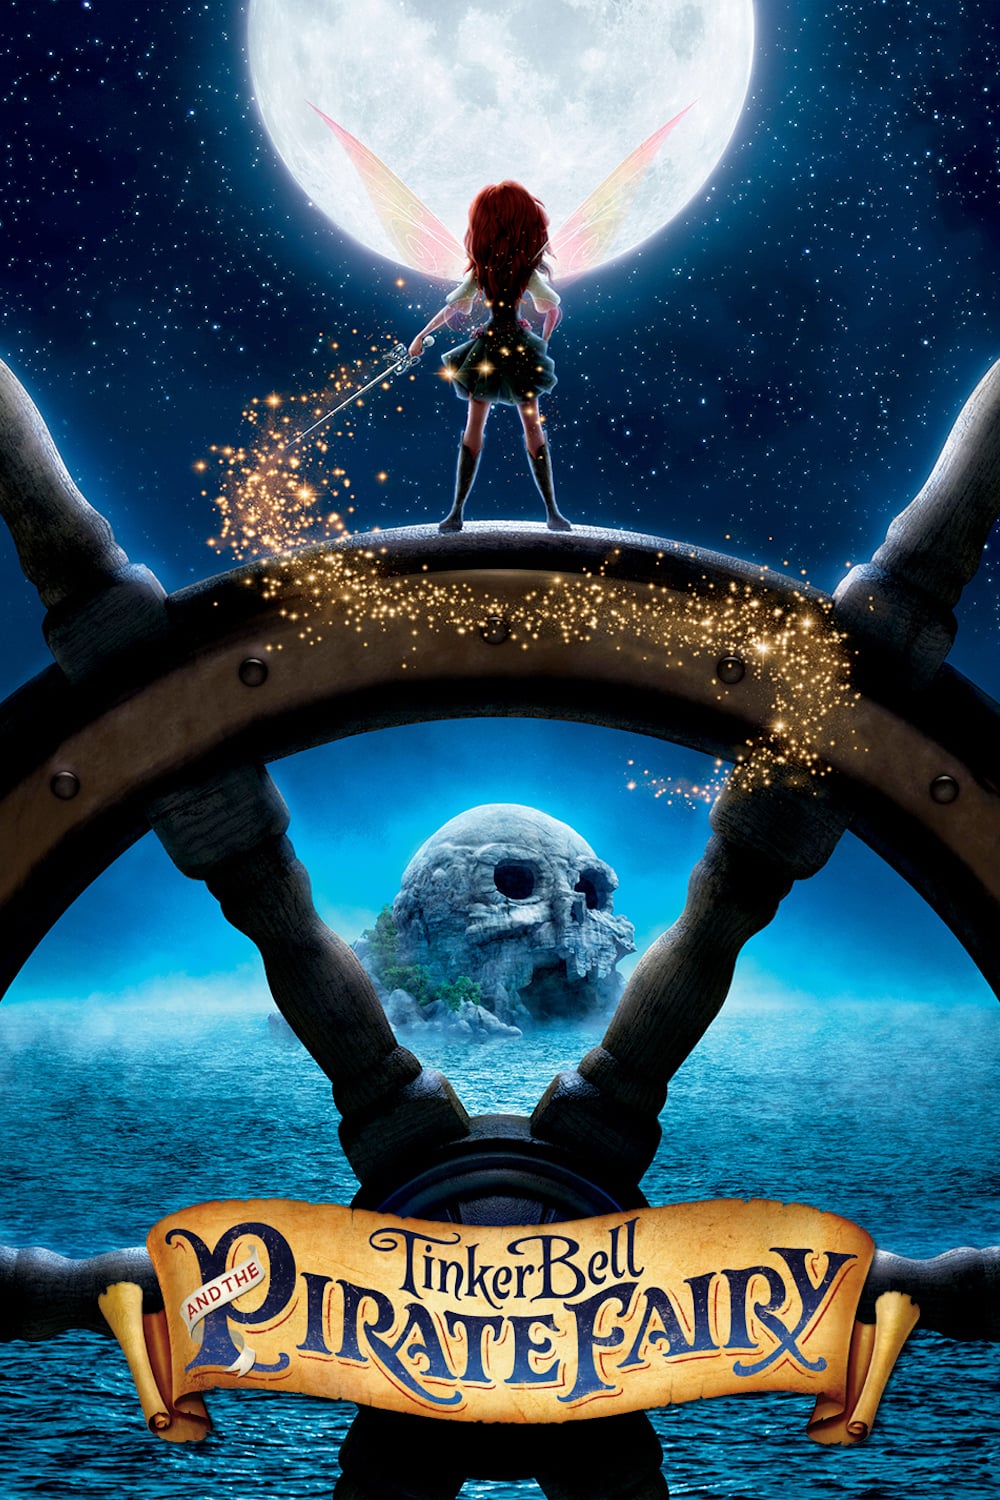 دانلود انیمیشن Tinker Bell and the Pirate Fairy 2014 با دوبله فارسی